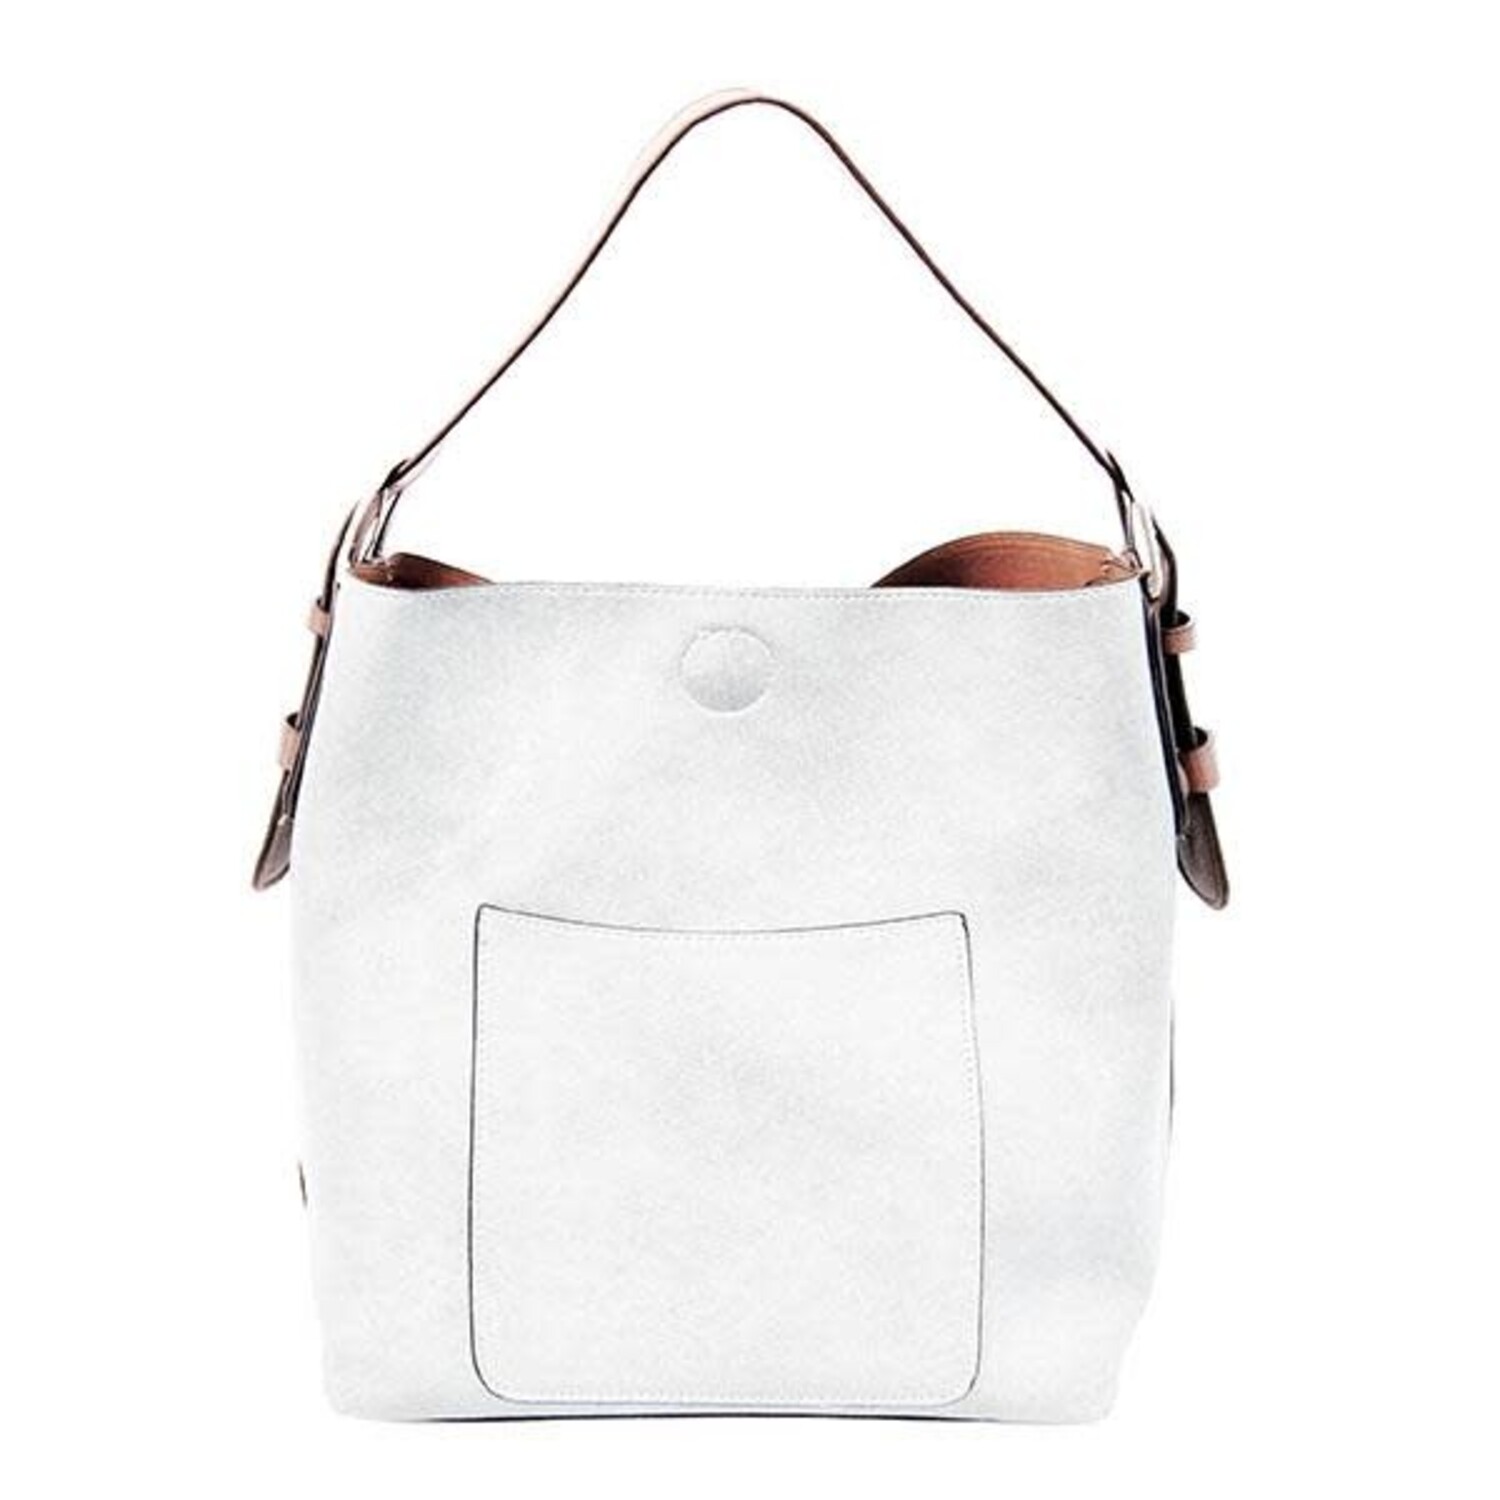 Joy Susan Women's Fashion Purse Blake Barrel Convertible Crossbody Hand Bag  - Black: Handbags: Amazon.com